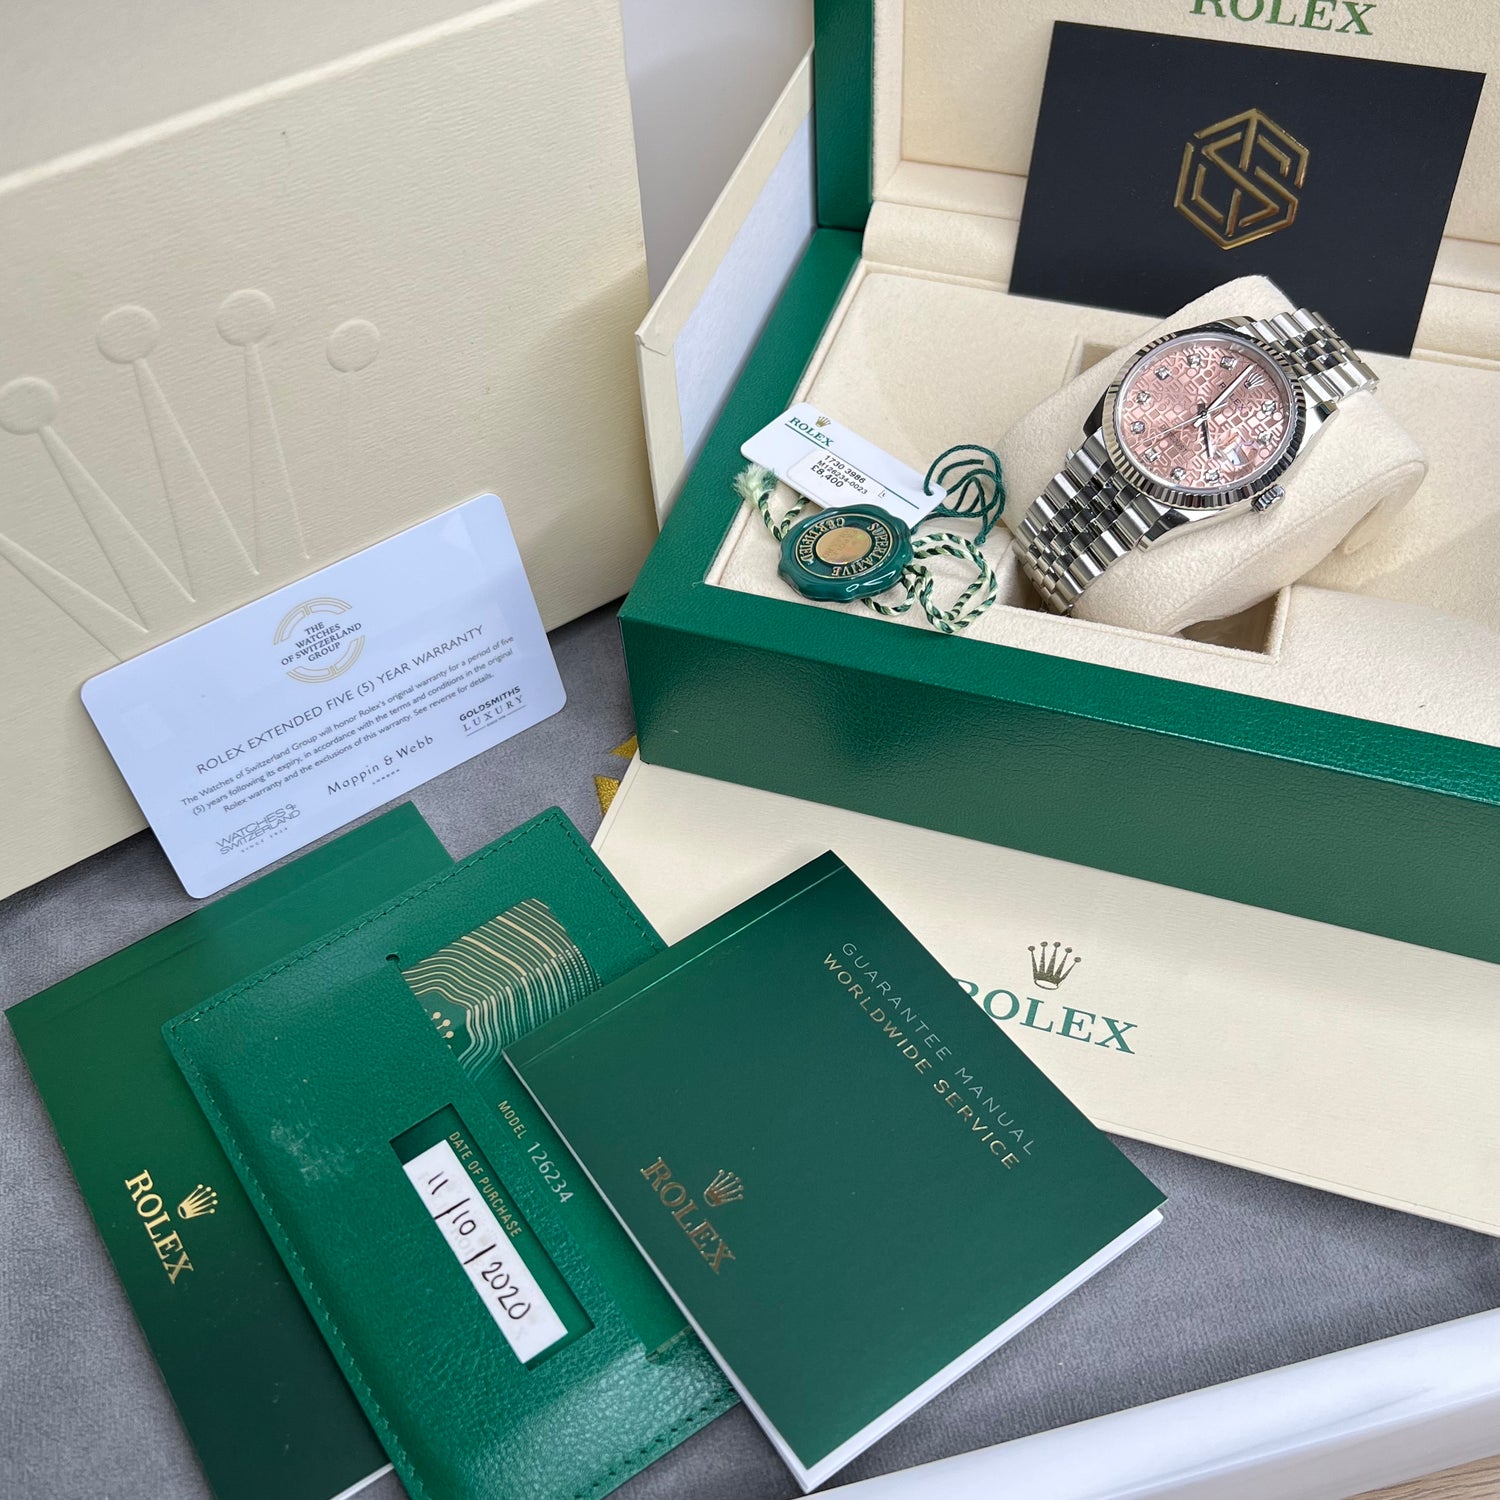 Rolex Datejust 36 126234 Rolex Motif Diamond Marker Ladies 2020 Full Set Watch